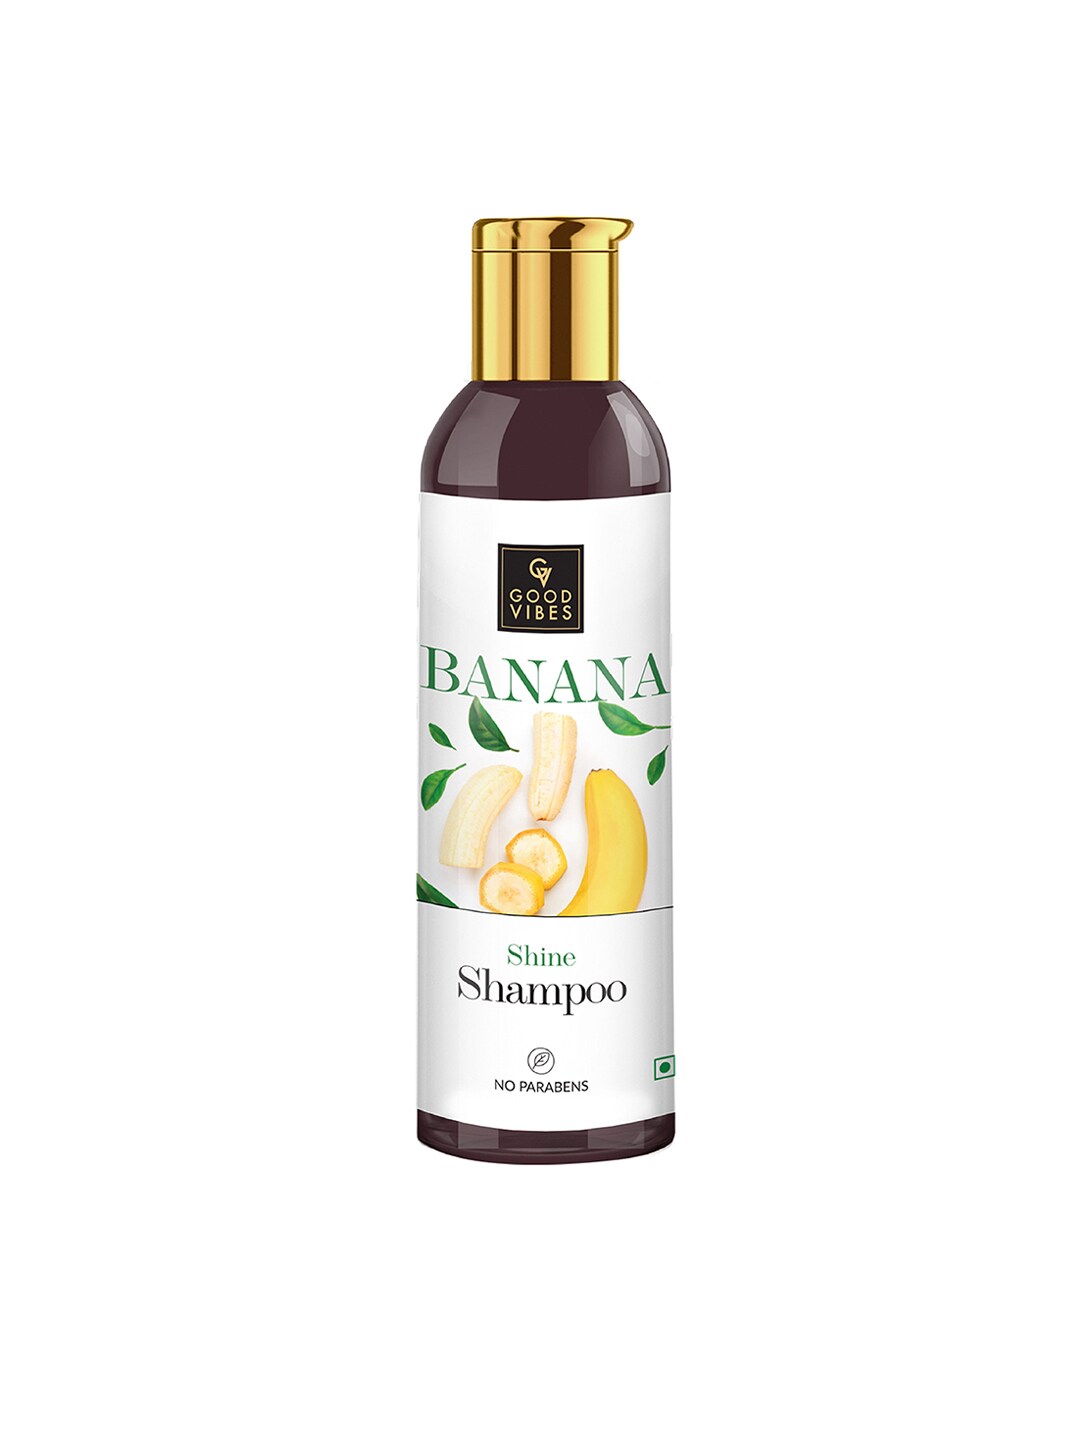 Good Vibes Banana Shine Shampoo - 200 ml Price in India